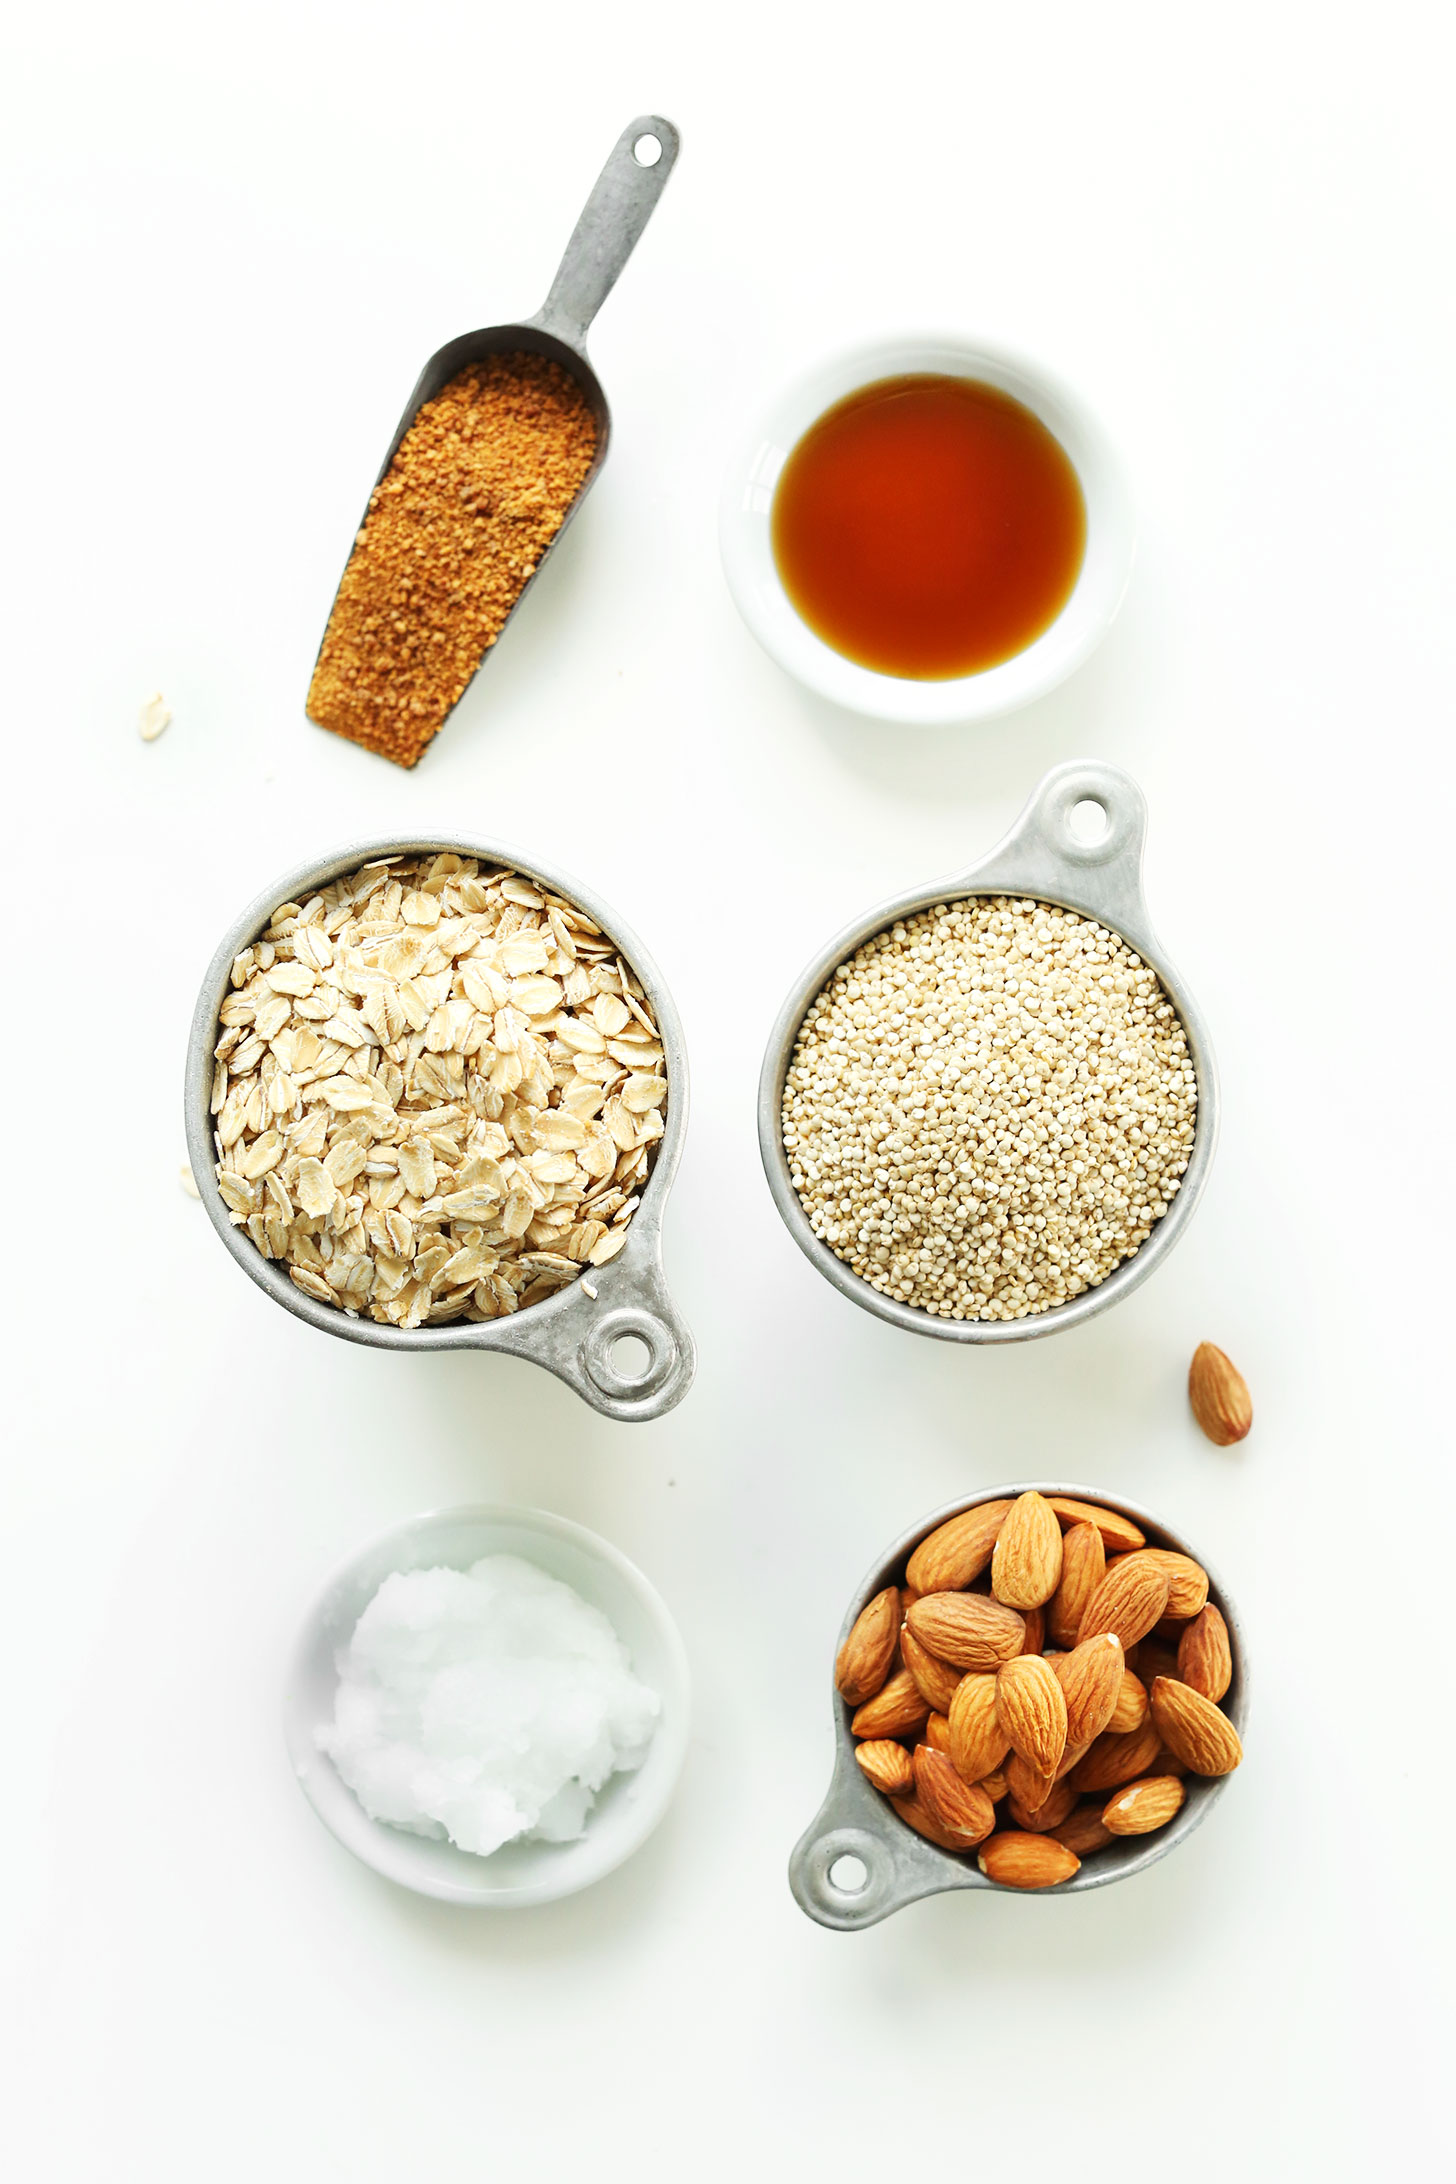 Coconut sugar, maple syrup, oats, quinoa, coconut oil, and almonds for making homemade vegan granola